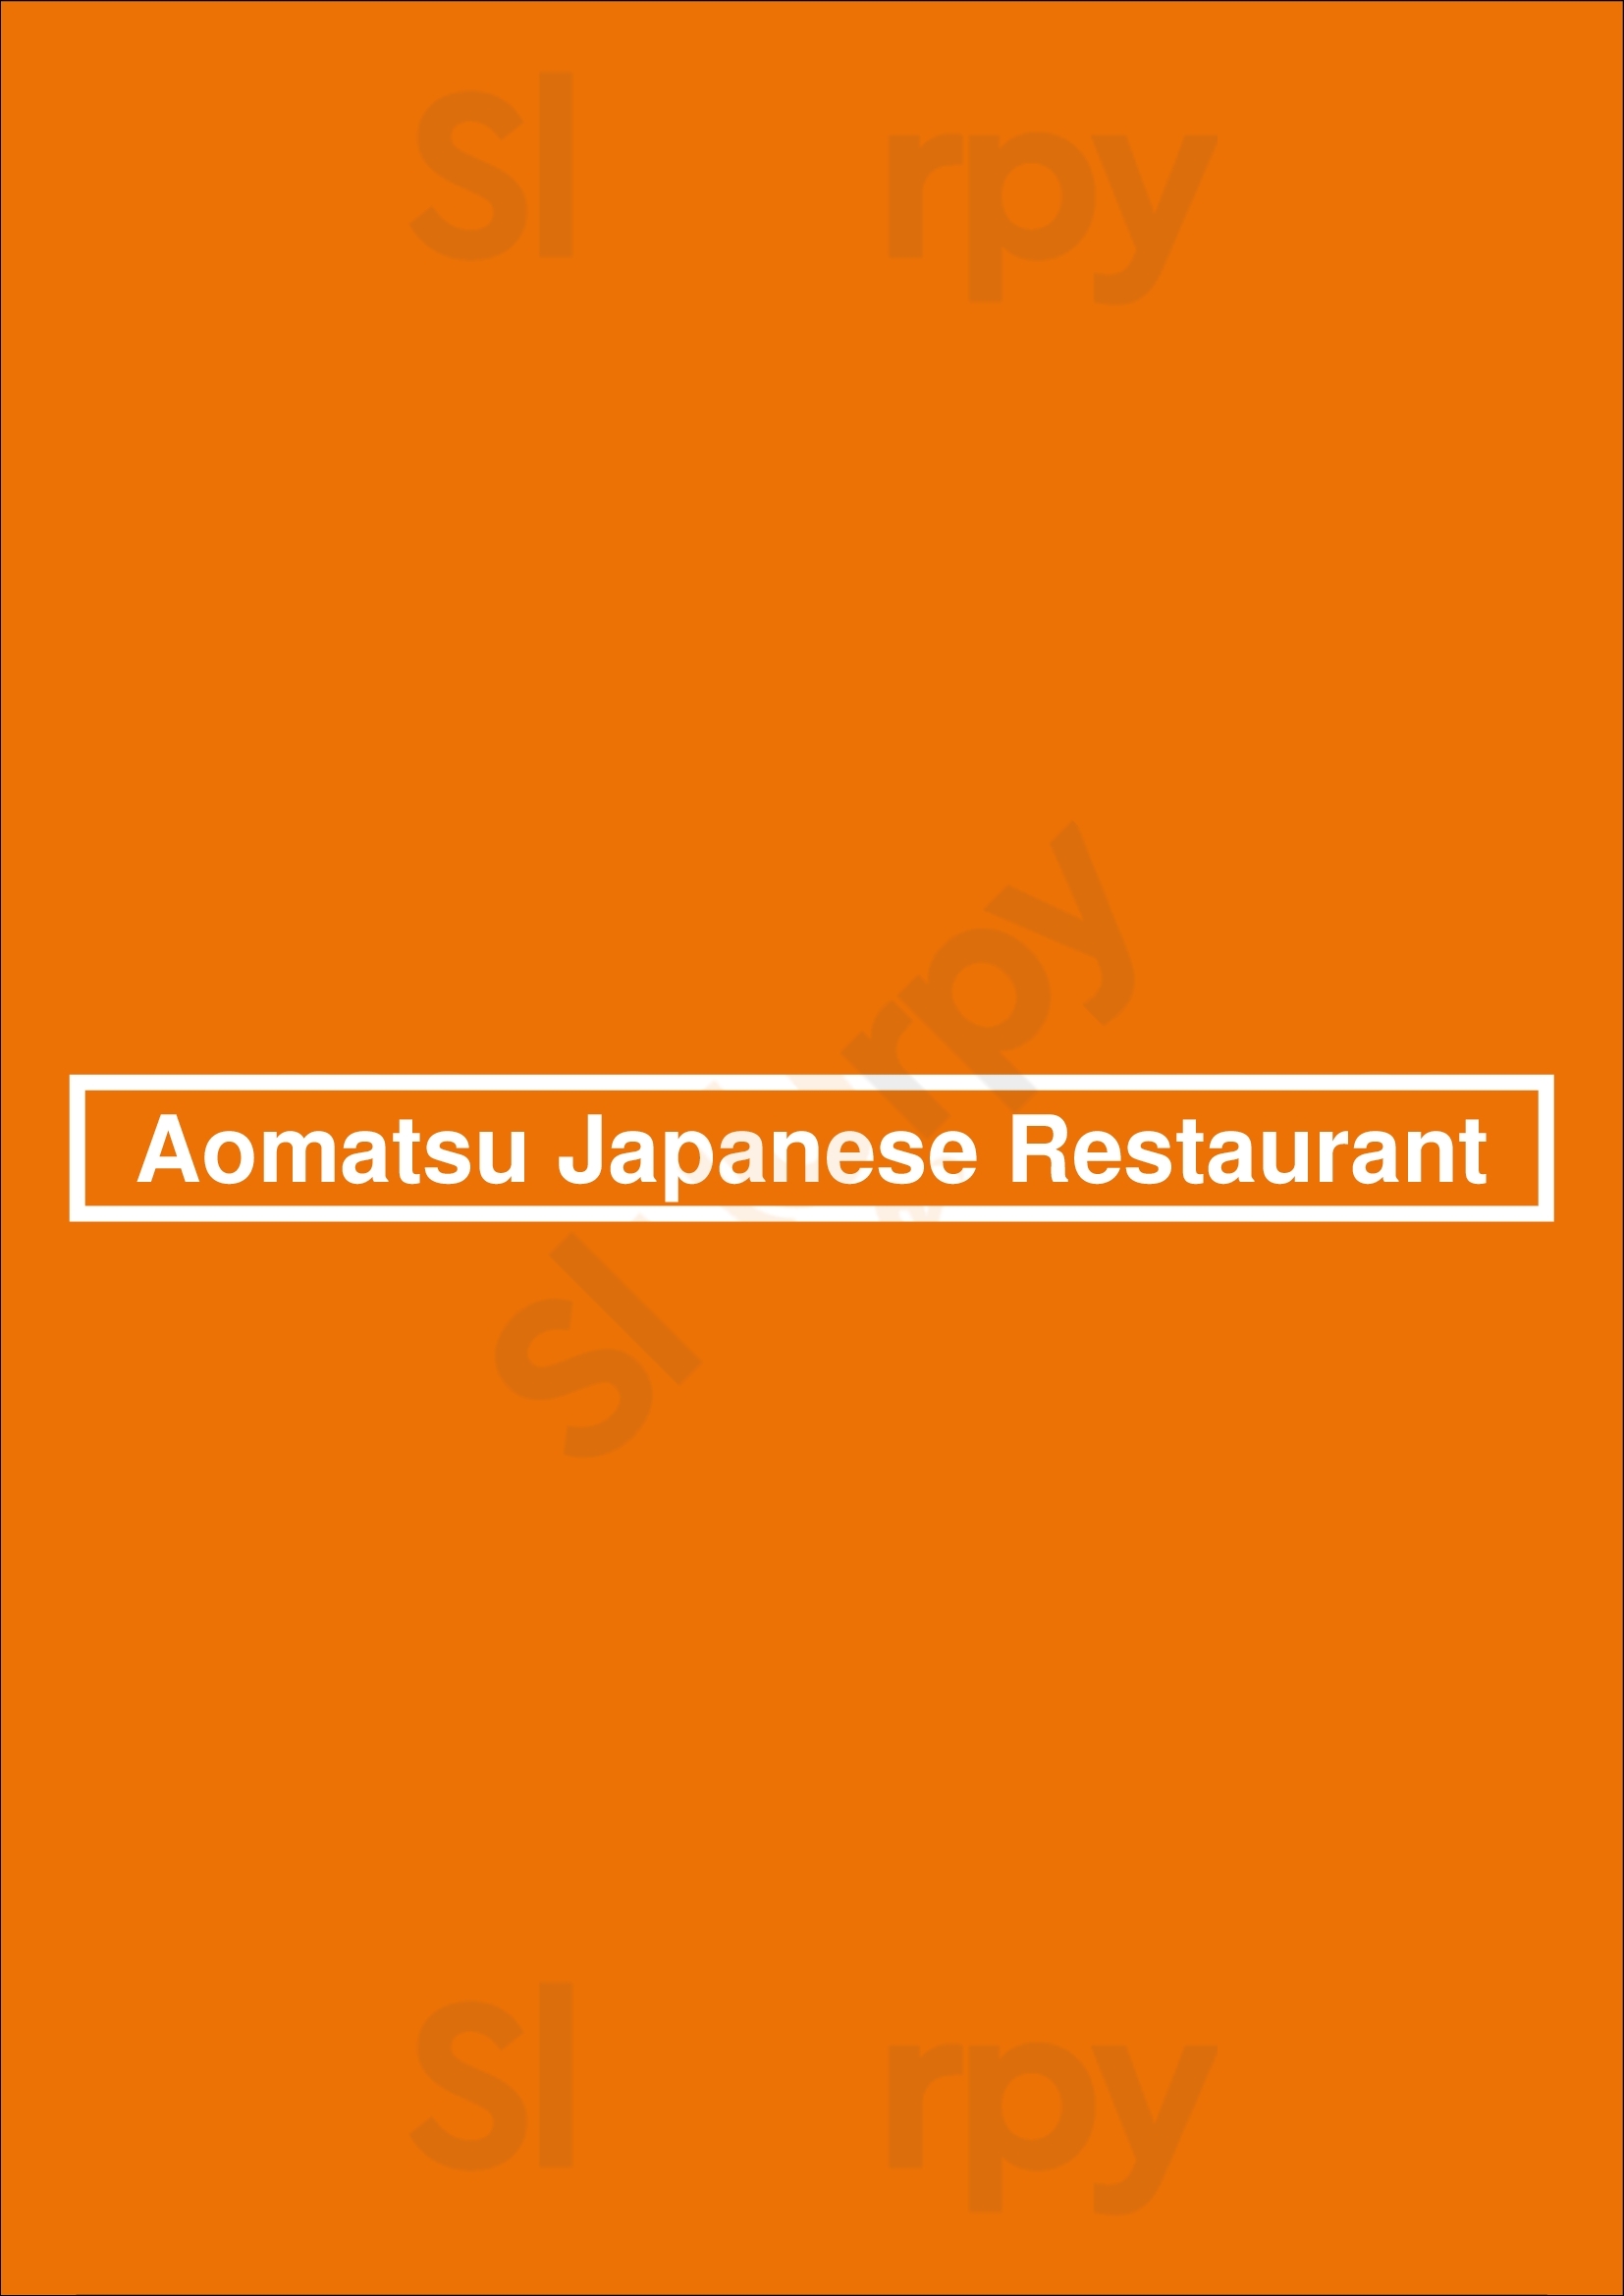 Aomatsu Japanese Restaurant Corvallis Menu - 1